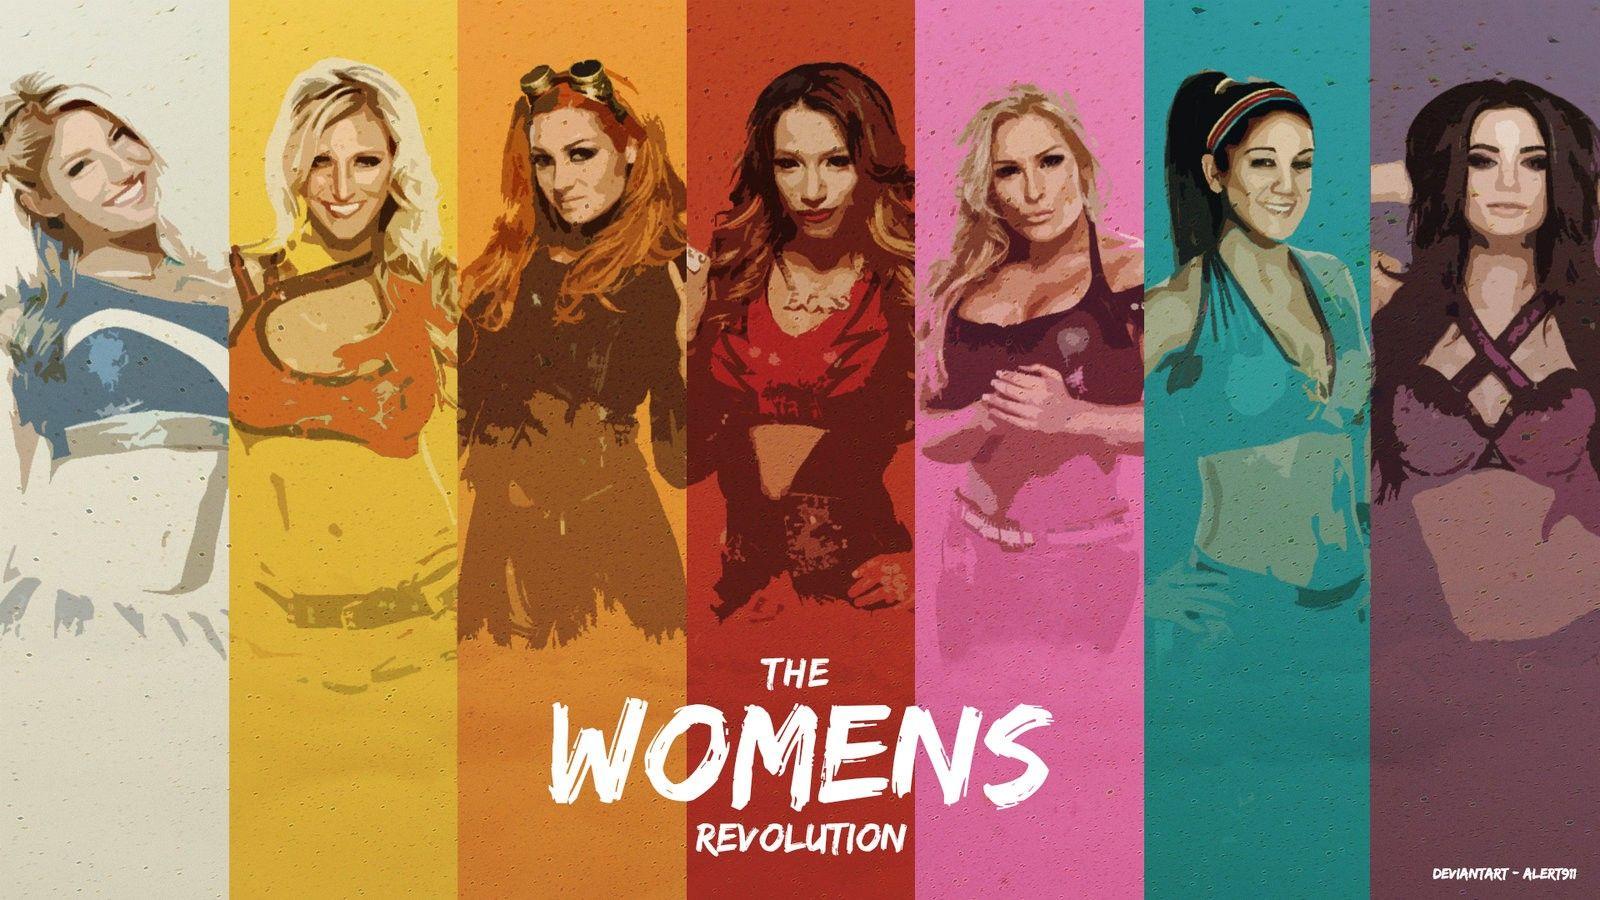 Charlotte Flair, #Becky Lynch, #Natalya Neidhart, #Bayley, #Paige